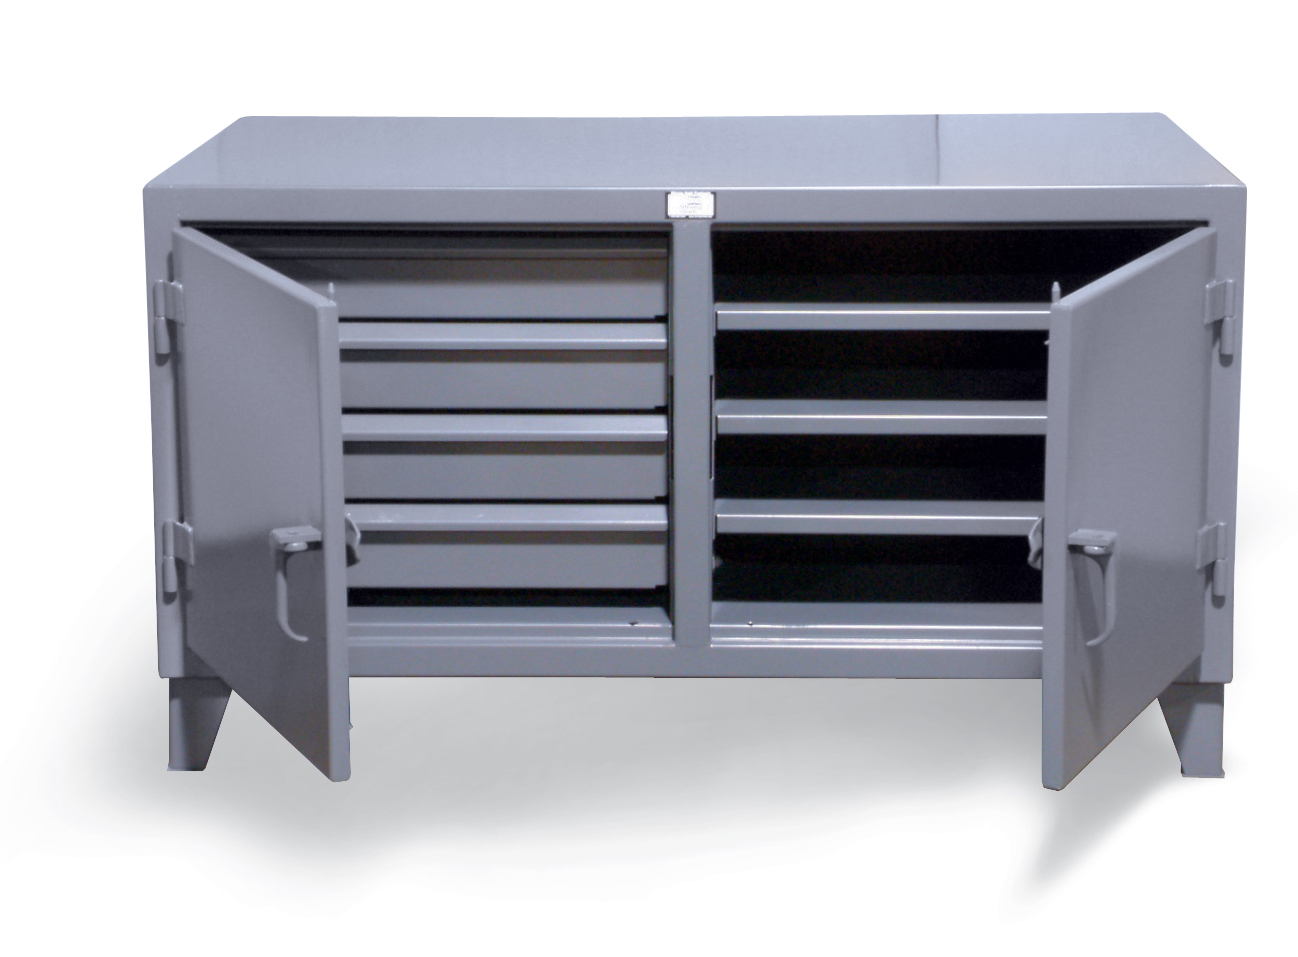 https://www.metalcabinetstore.com/stronghold/cabinet-workbench-with-hidden-drawer-storage.jpg